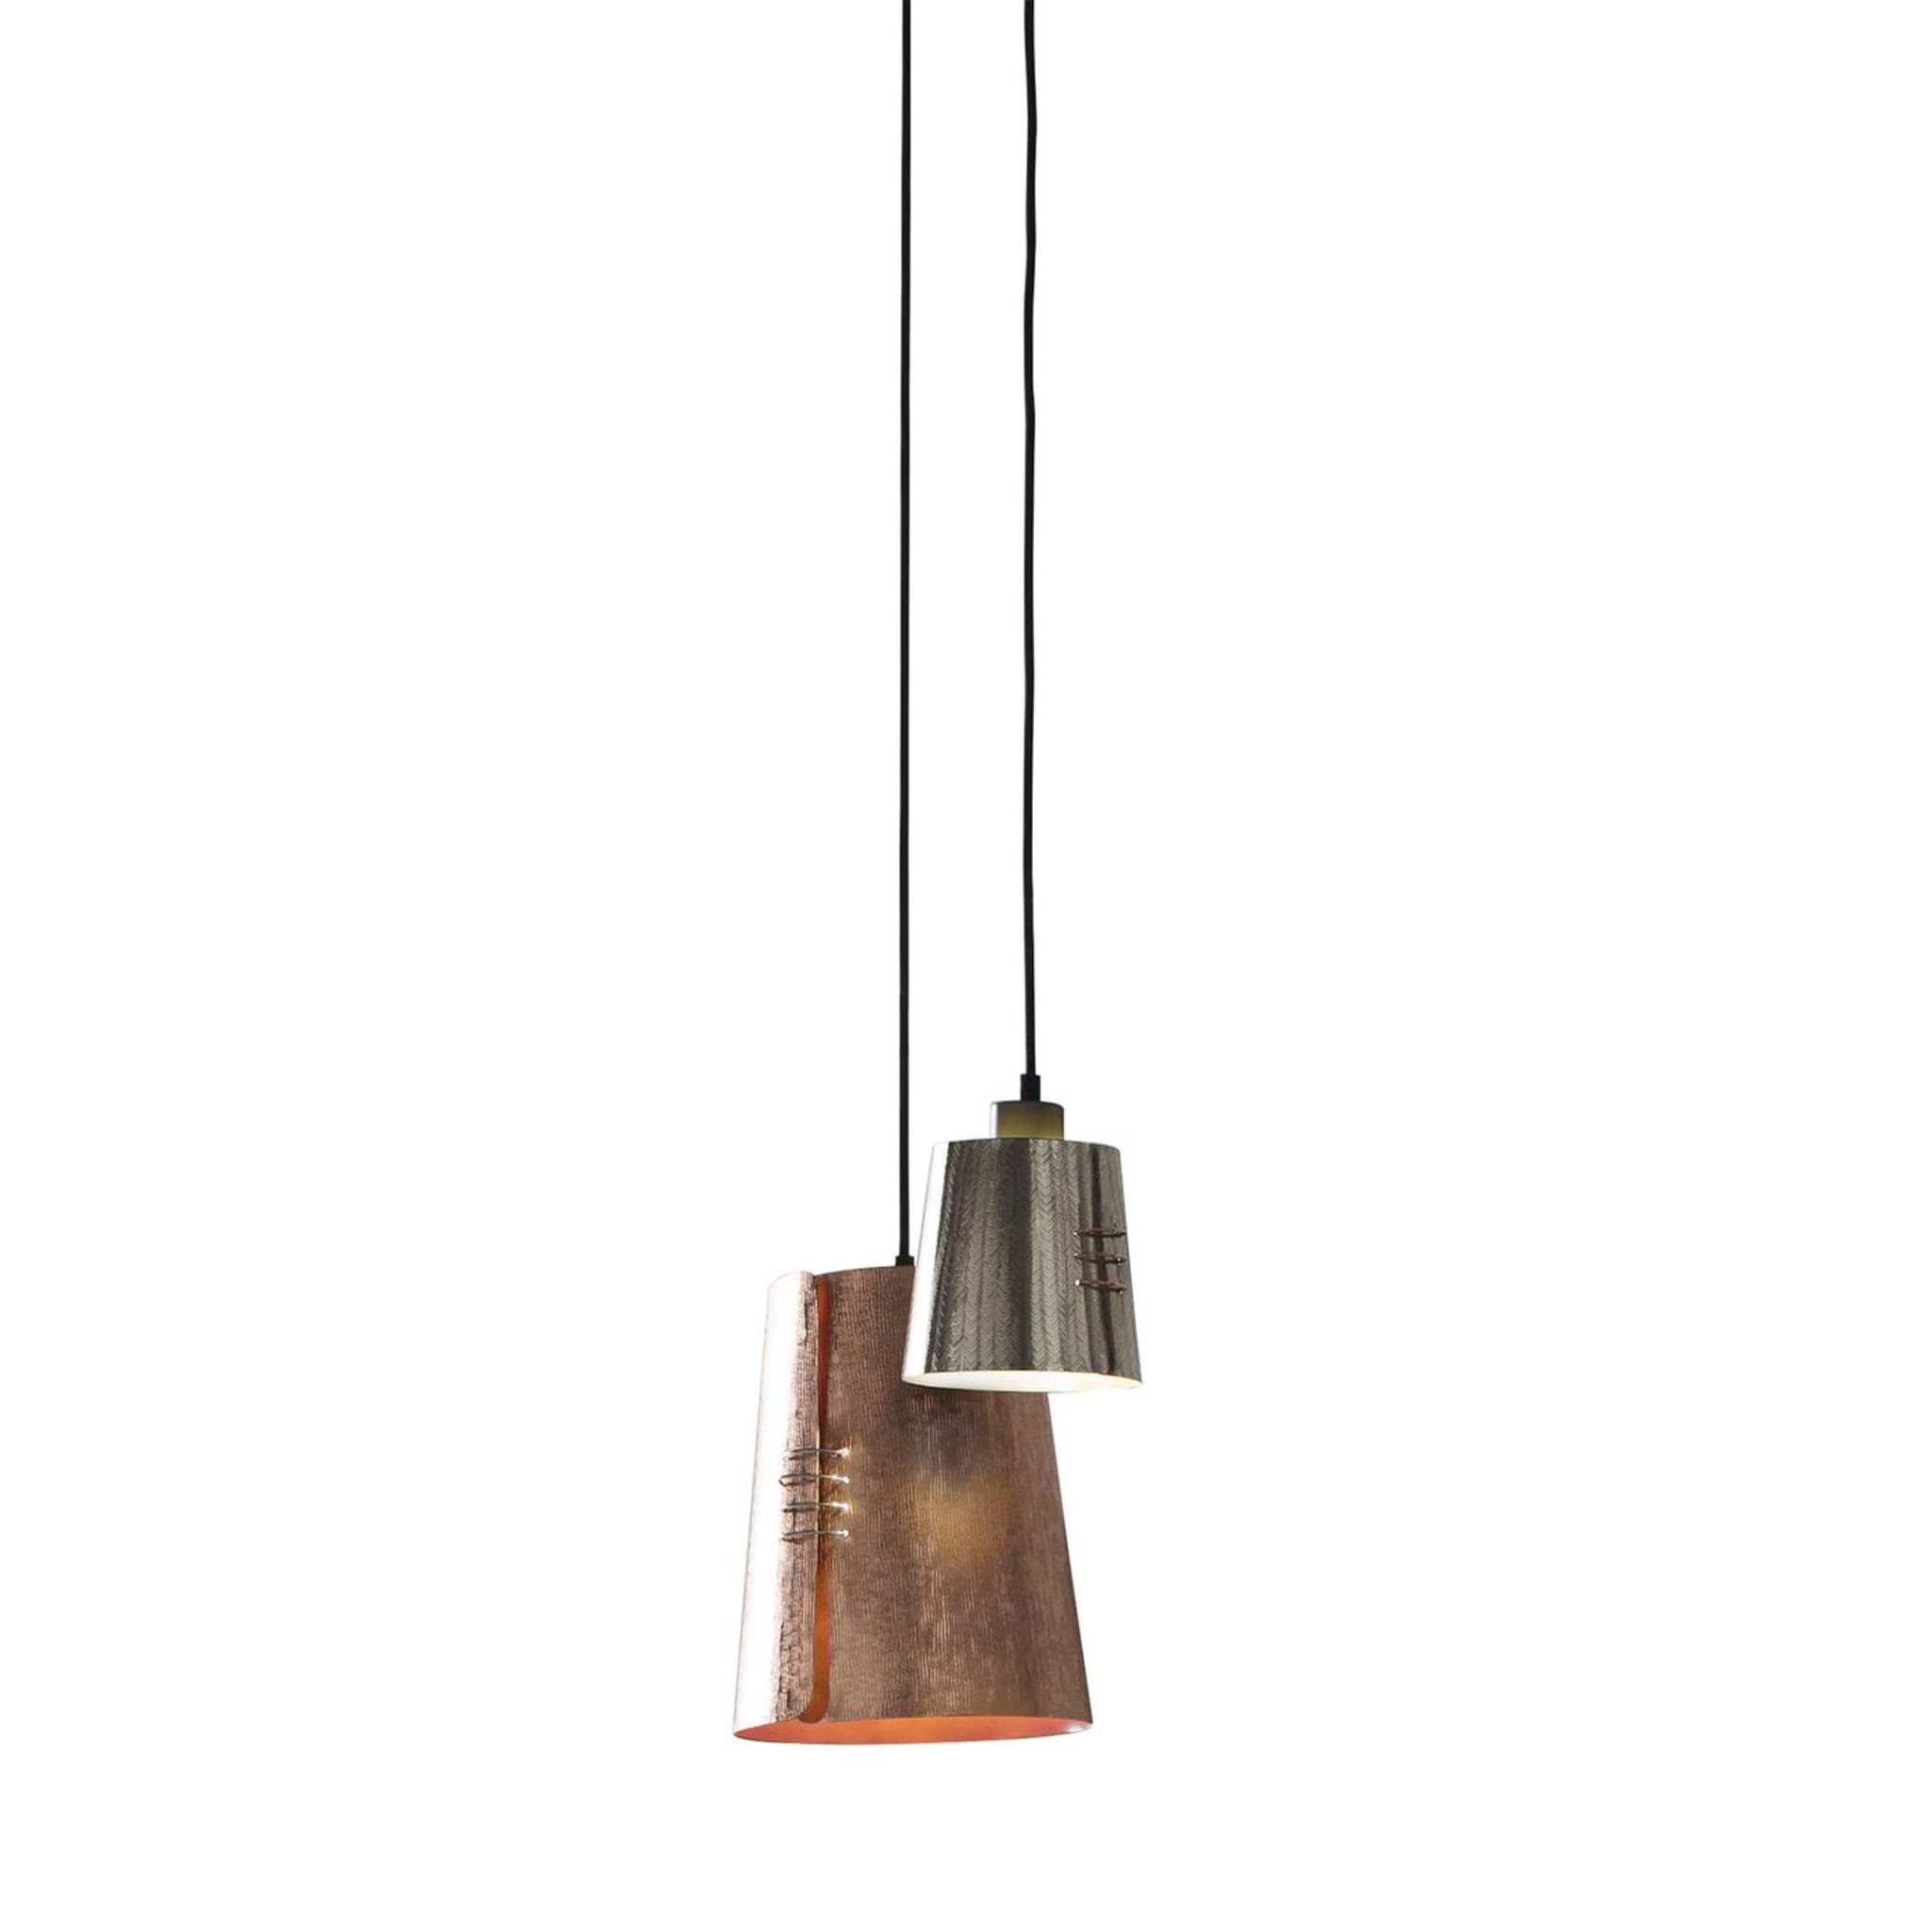 Cucito Set of 2 Pendant Lamps - Main view